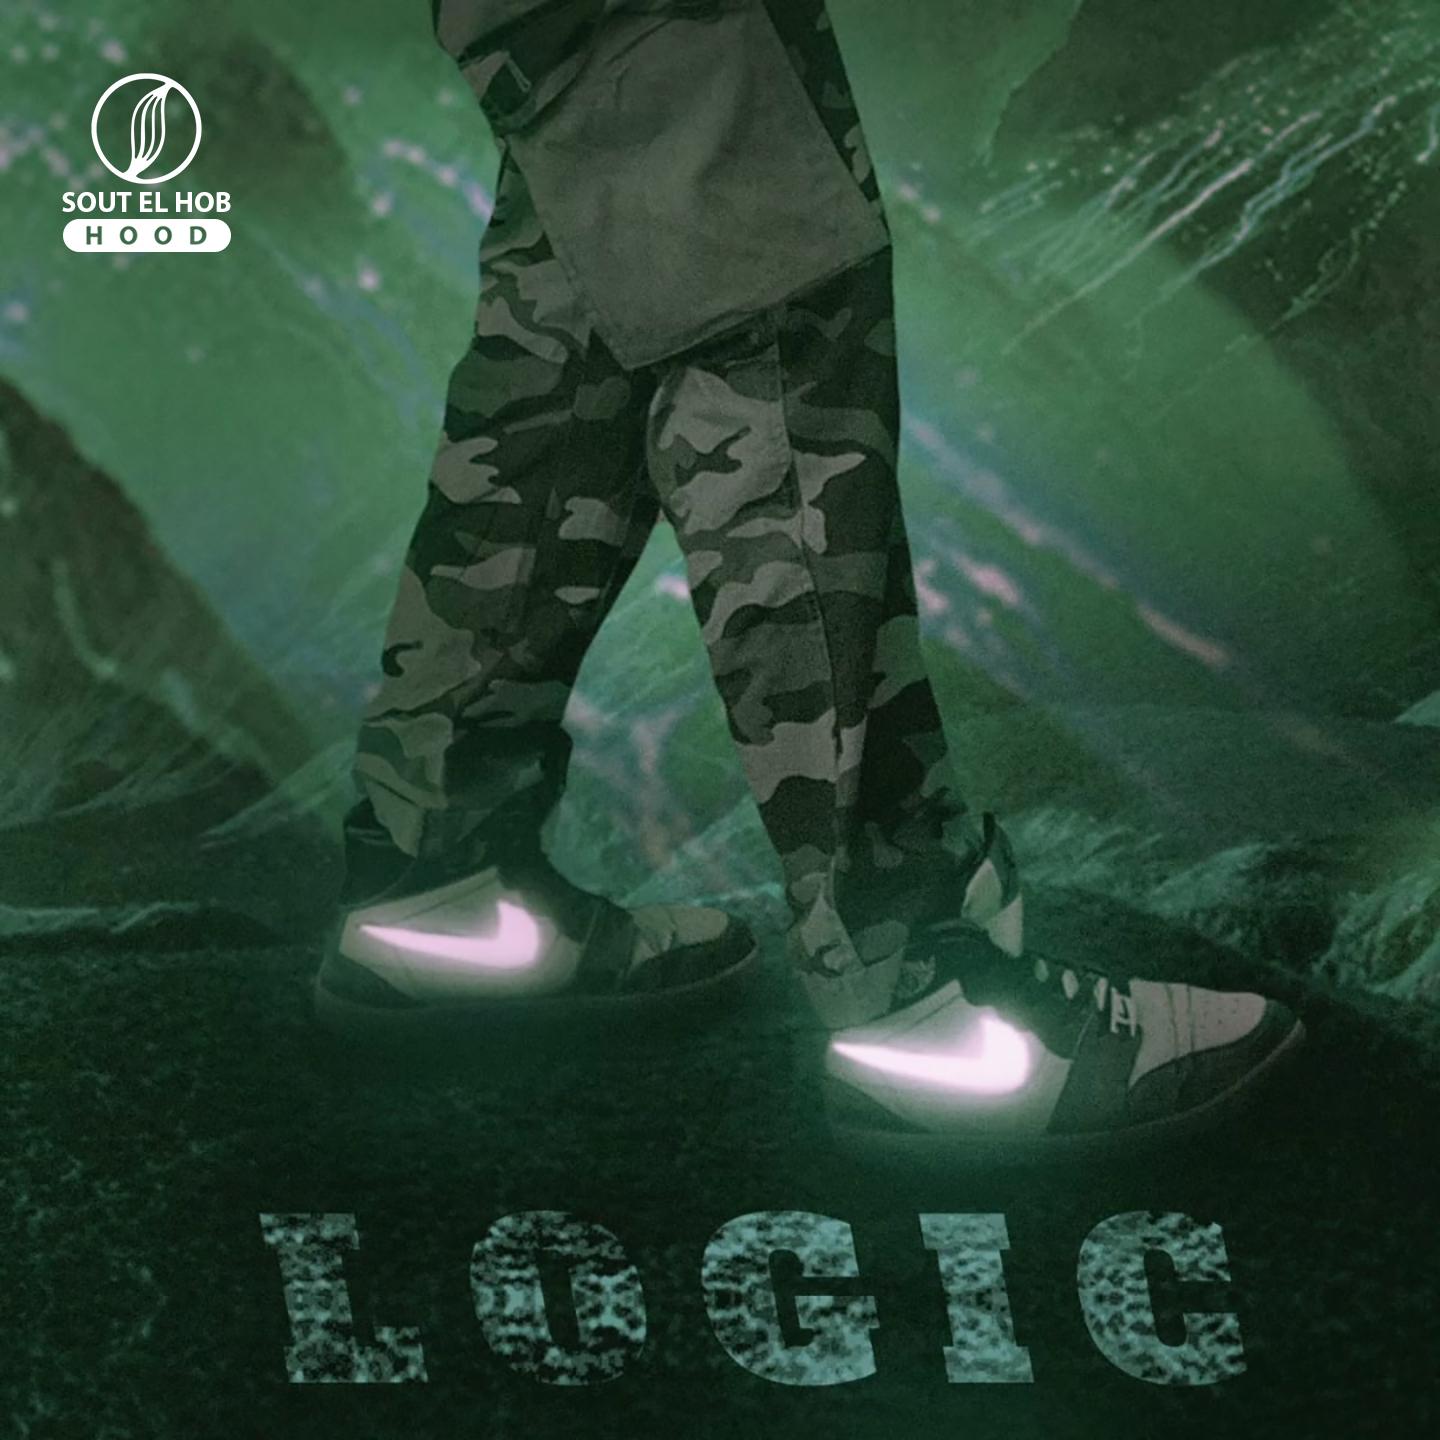 Постер альбома Logic